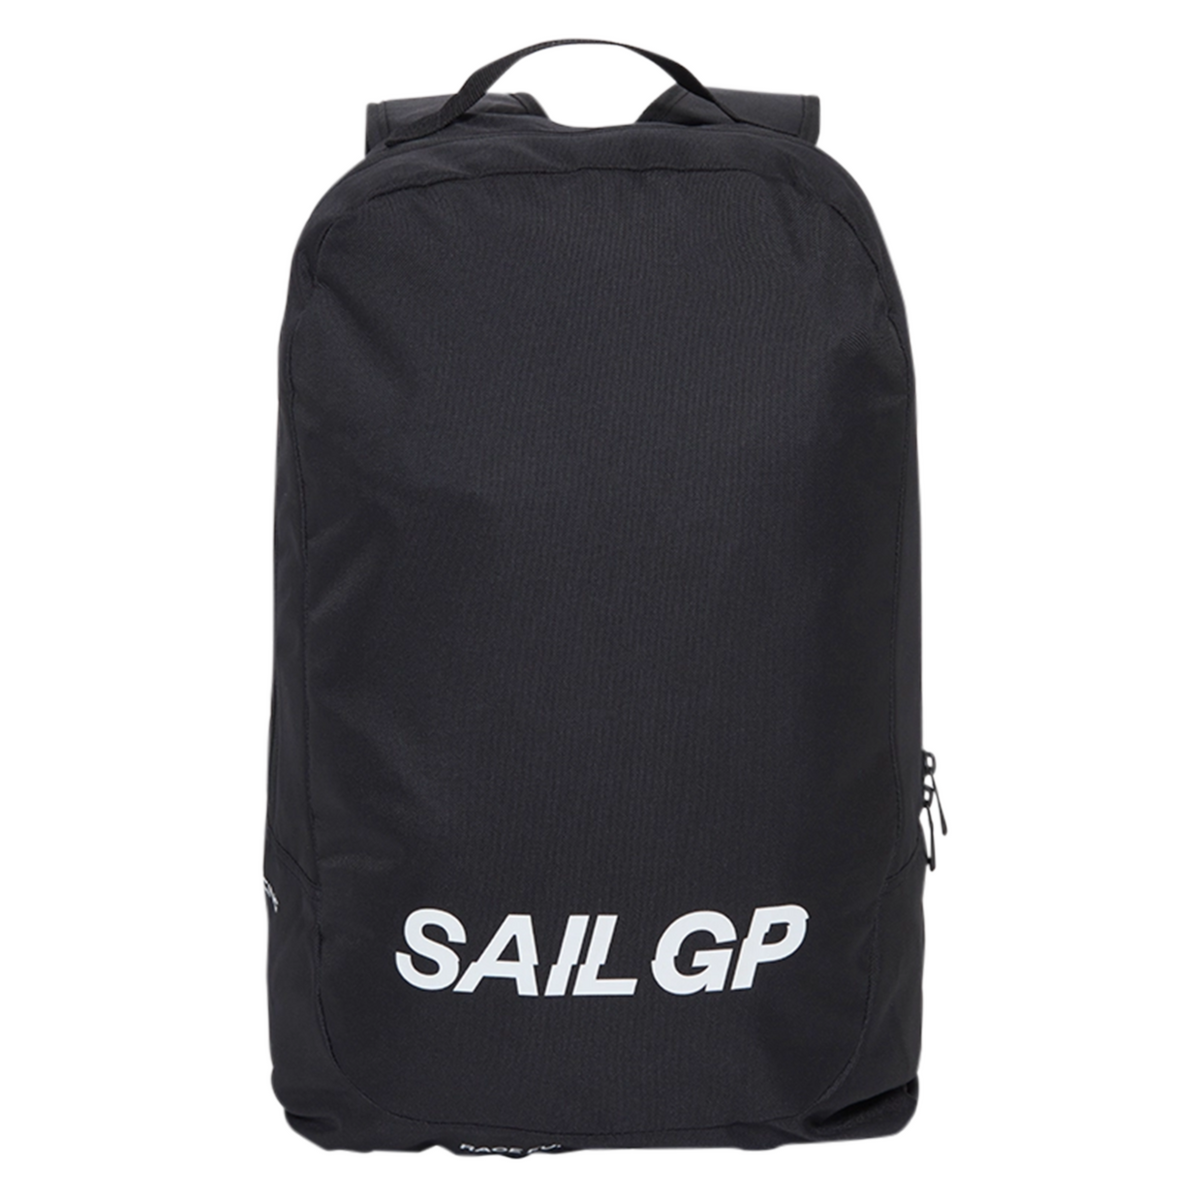 SailGP Black Backpack